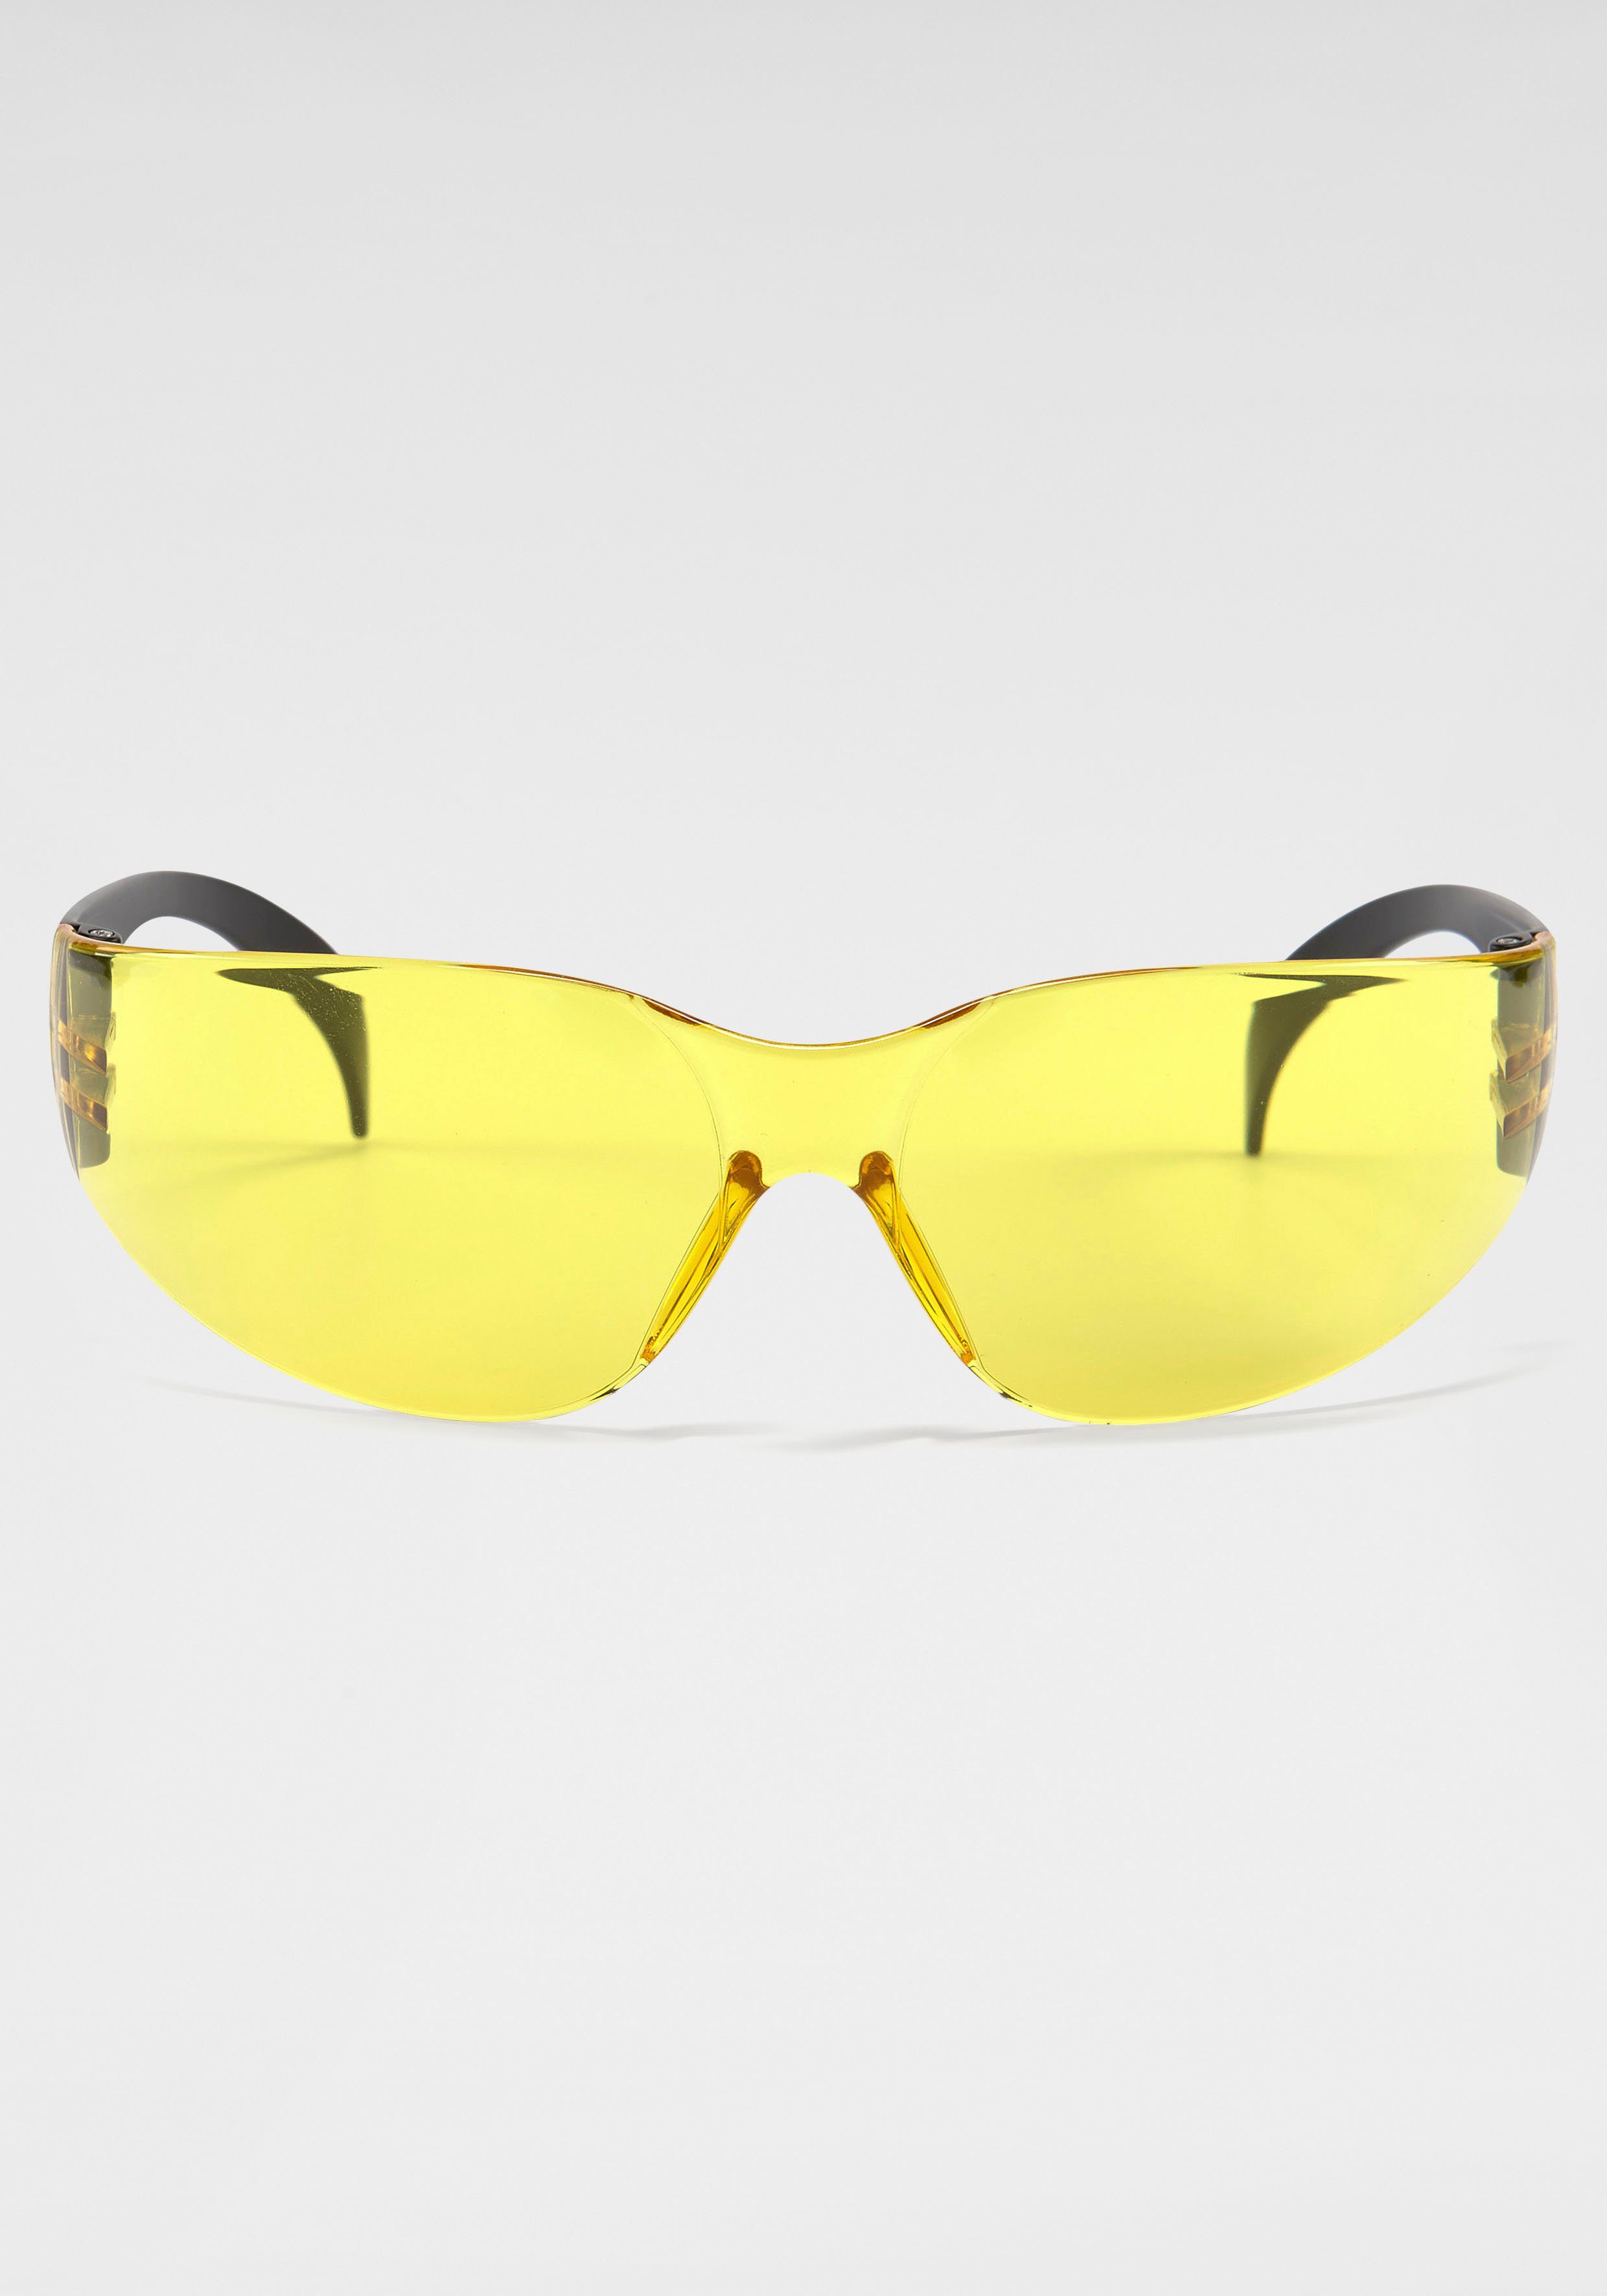 BACK IN BLACK Eyewear Sonnenbrille Randlos gelb